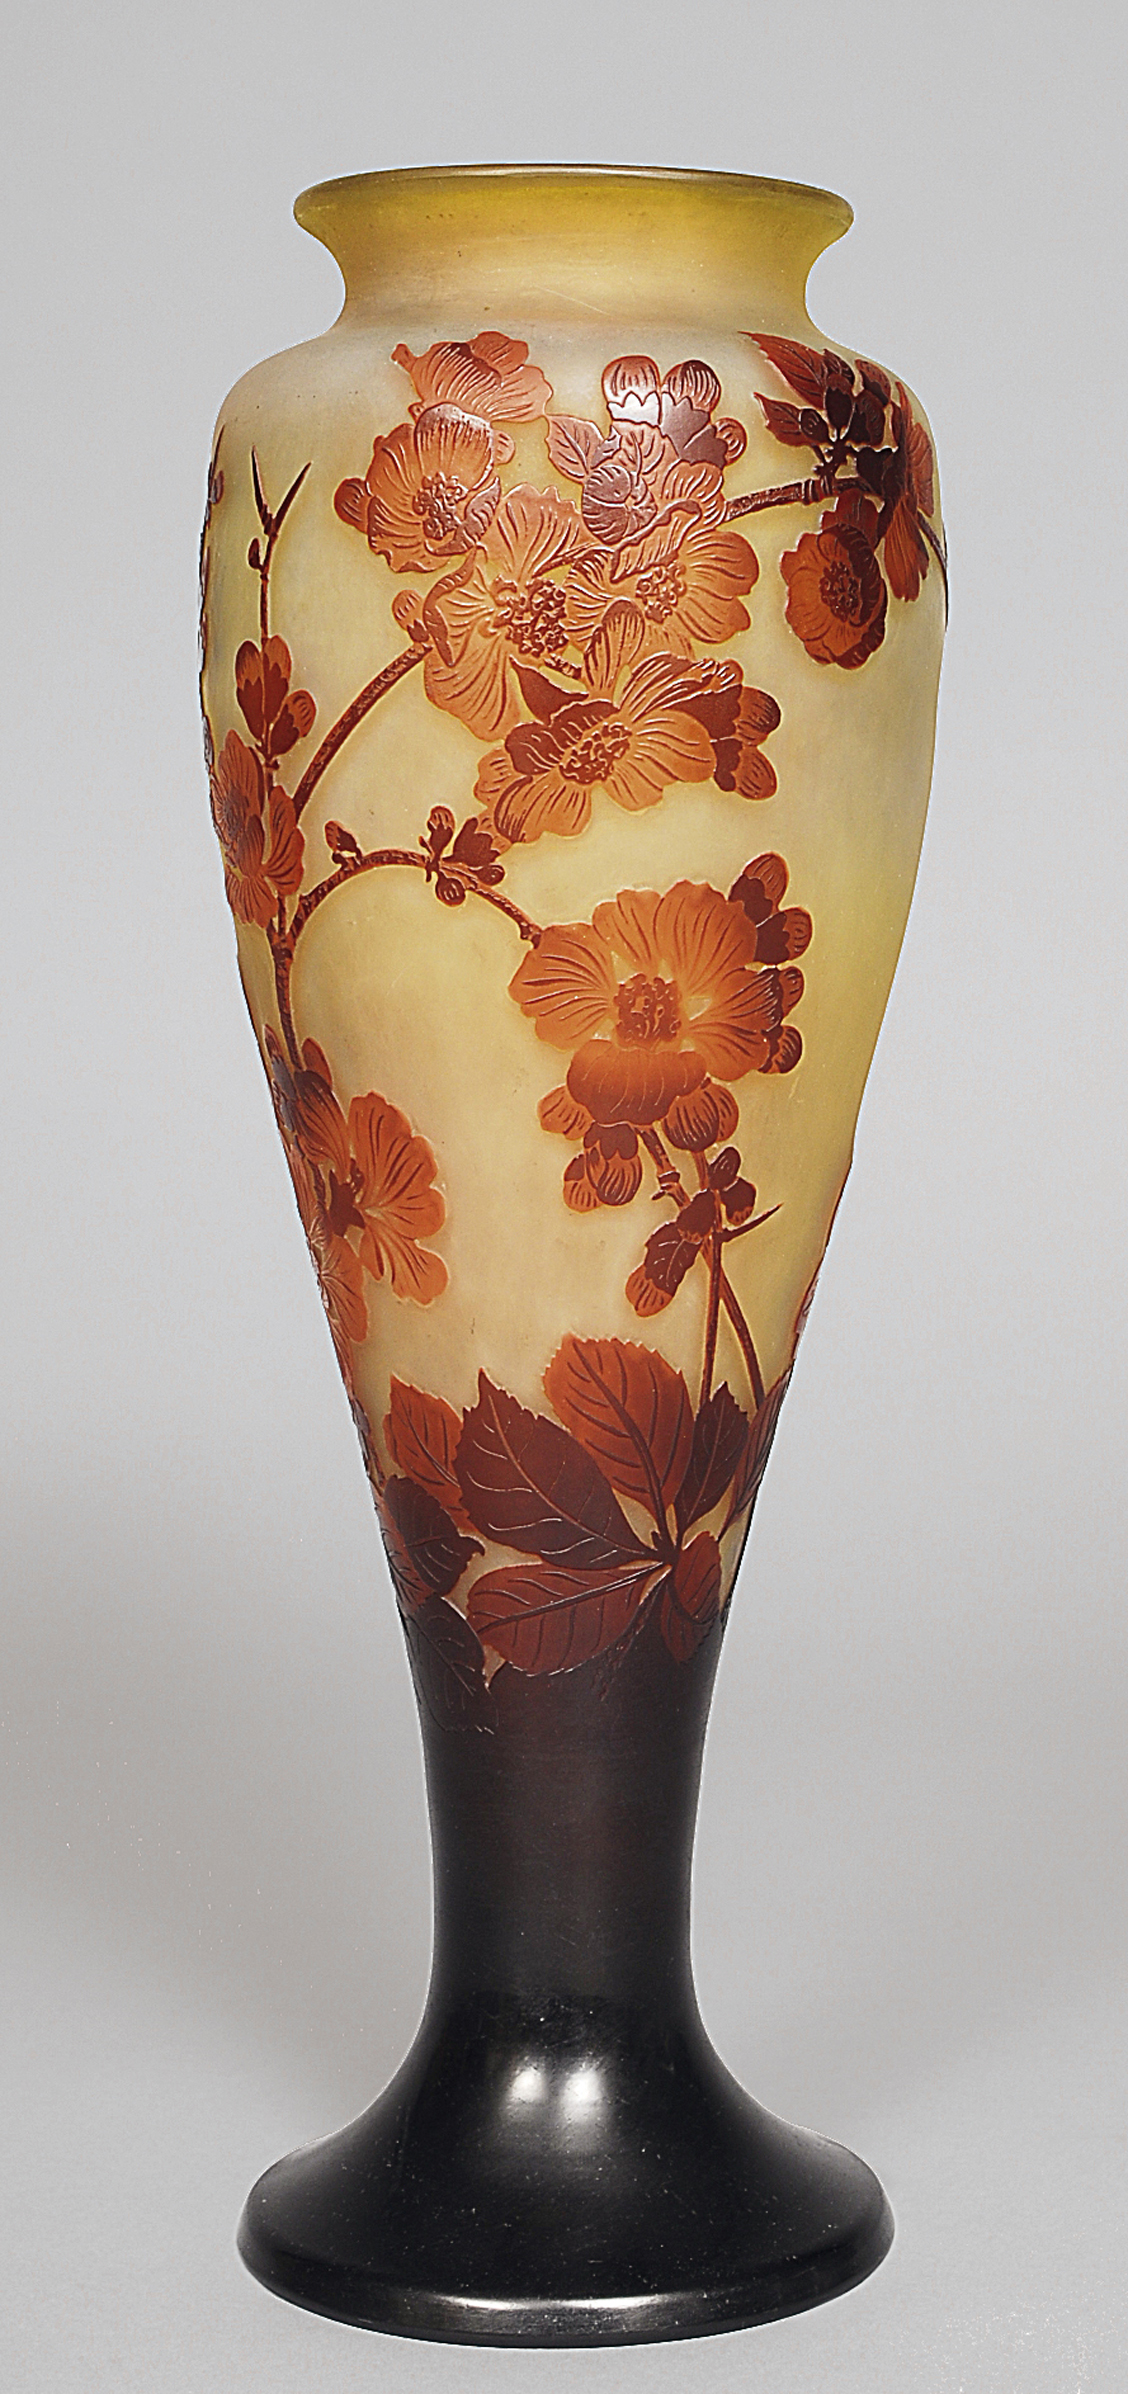 A large Art Nouveau vase with dog roses